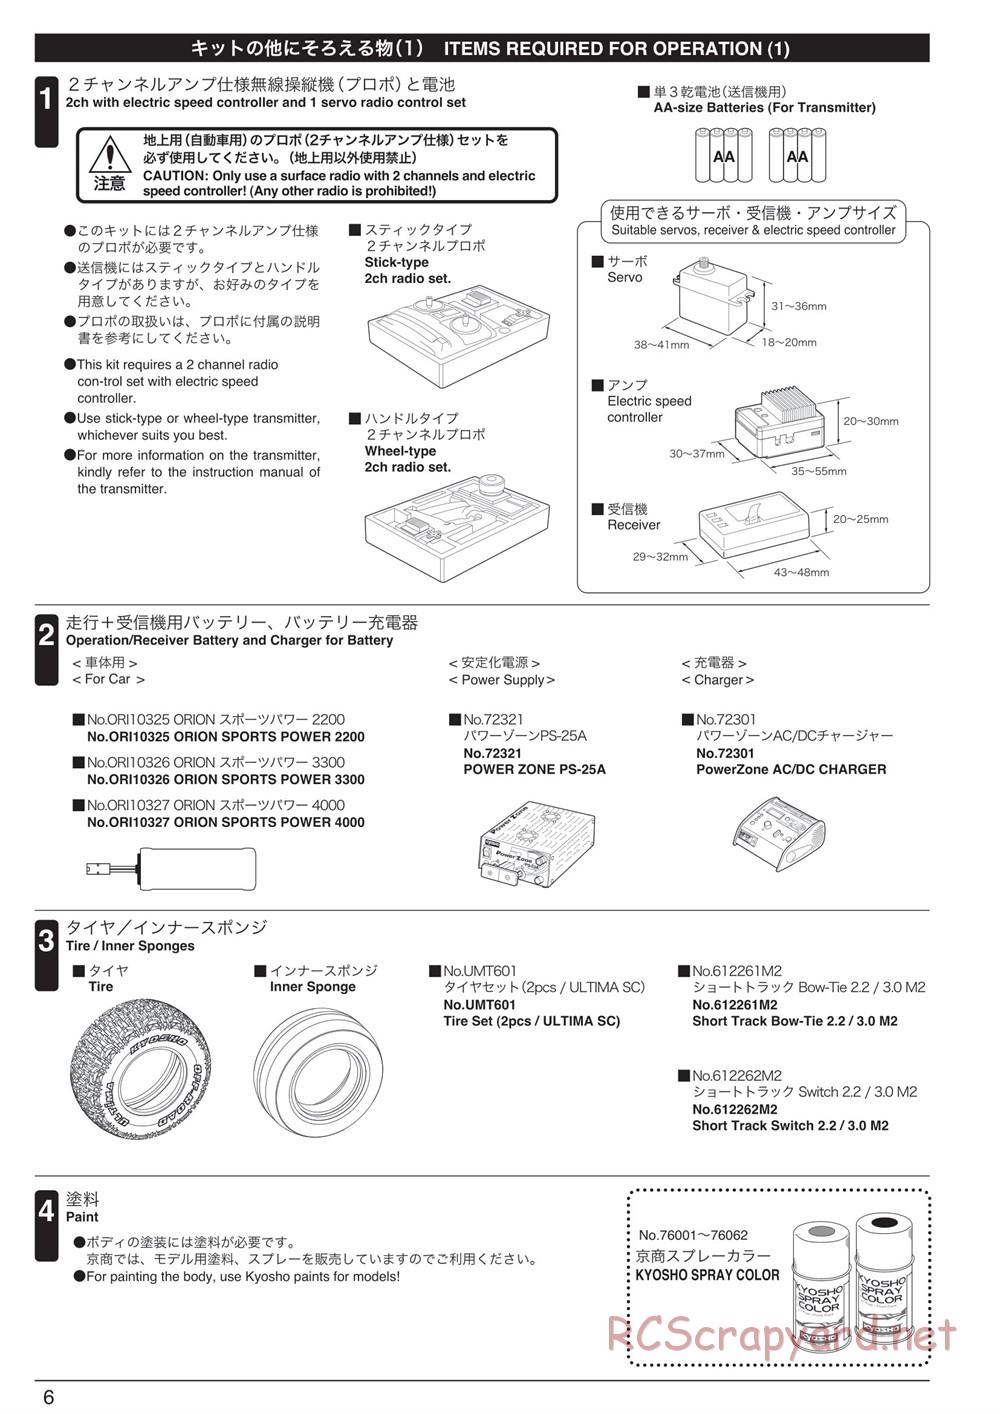 Kyosho - Ultima SCR - Manual - Page 6